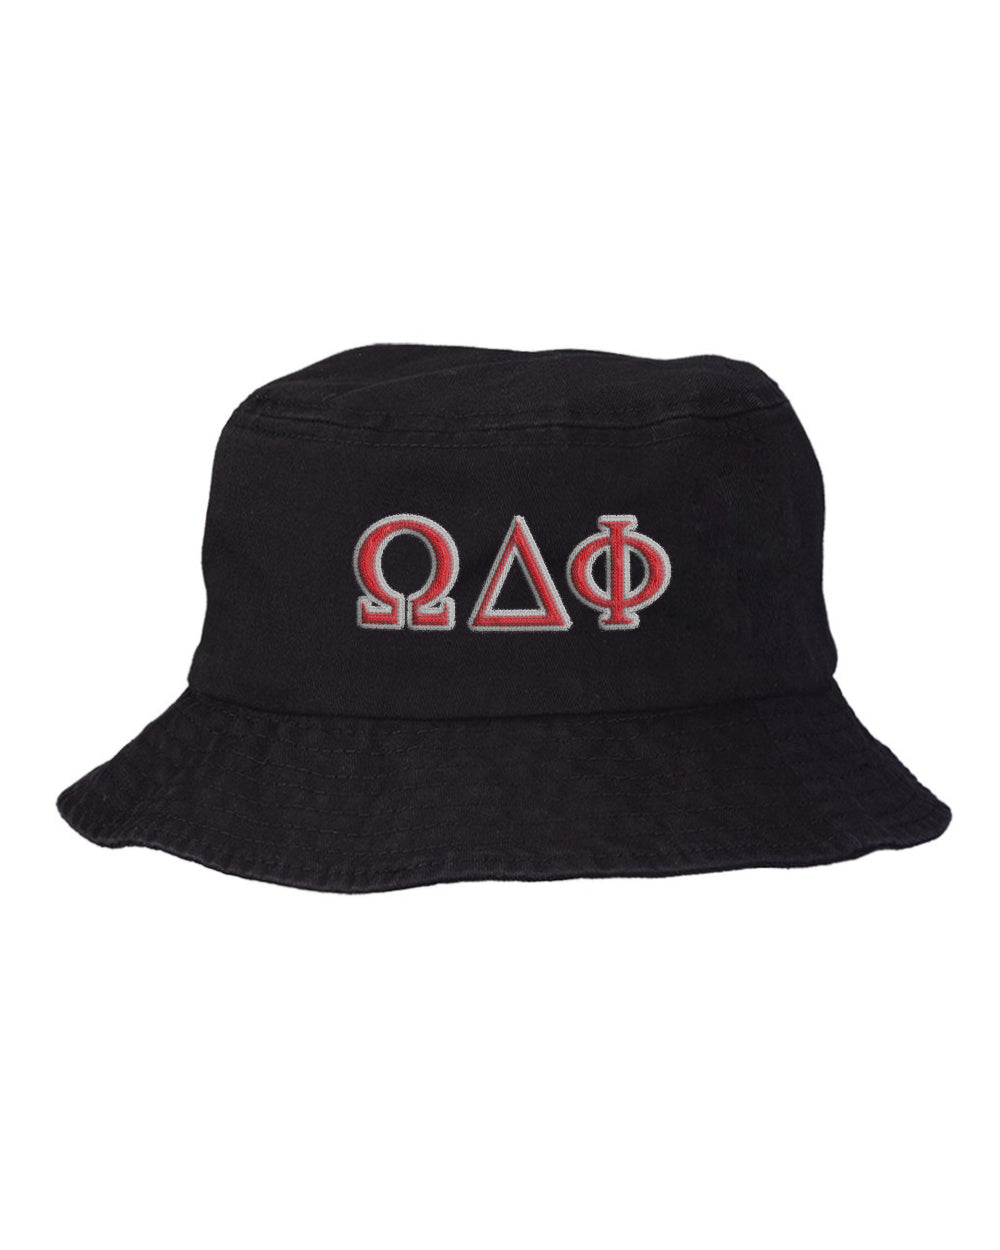 Omega Delta Phi Embroidered Bucket Hat